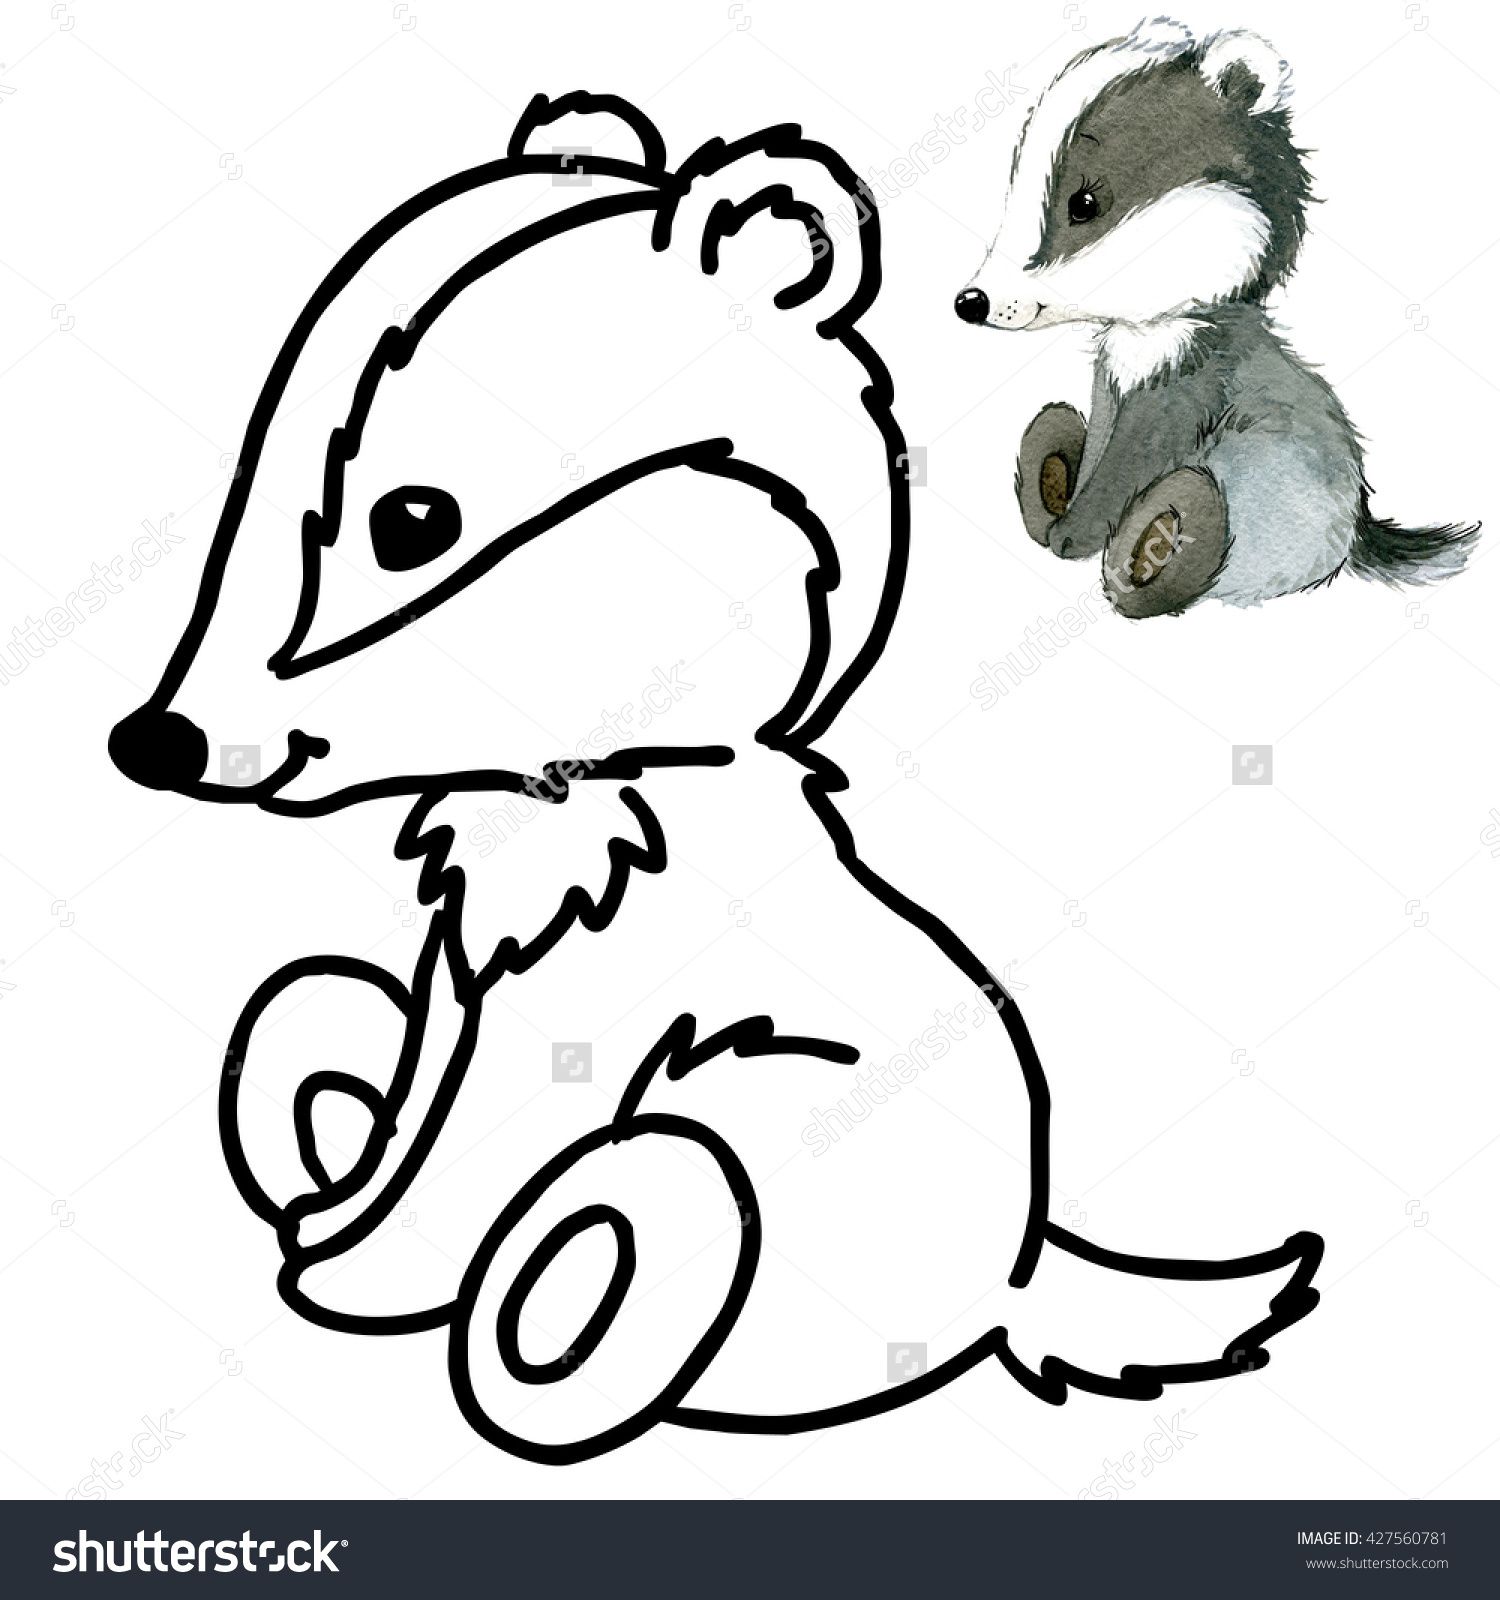 Stock photo cute coloring. Badger clipart simple cartoon